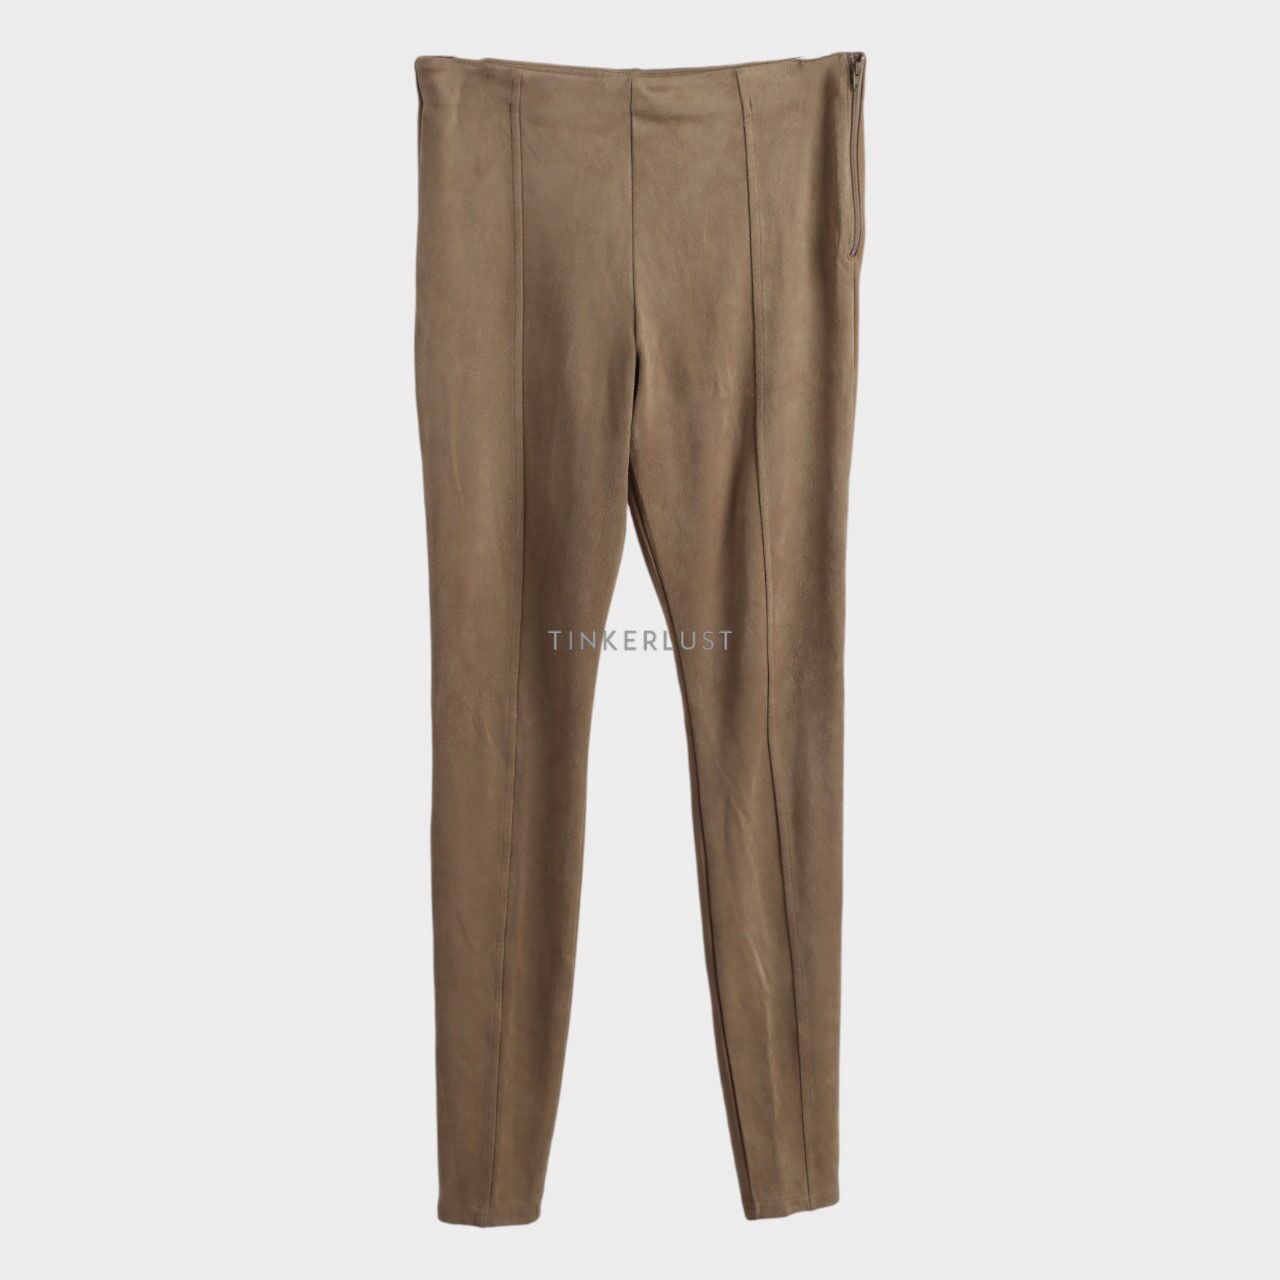 H&M Olive Suede Long Pants